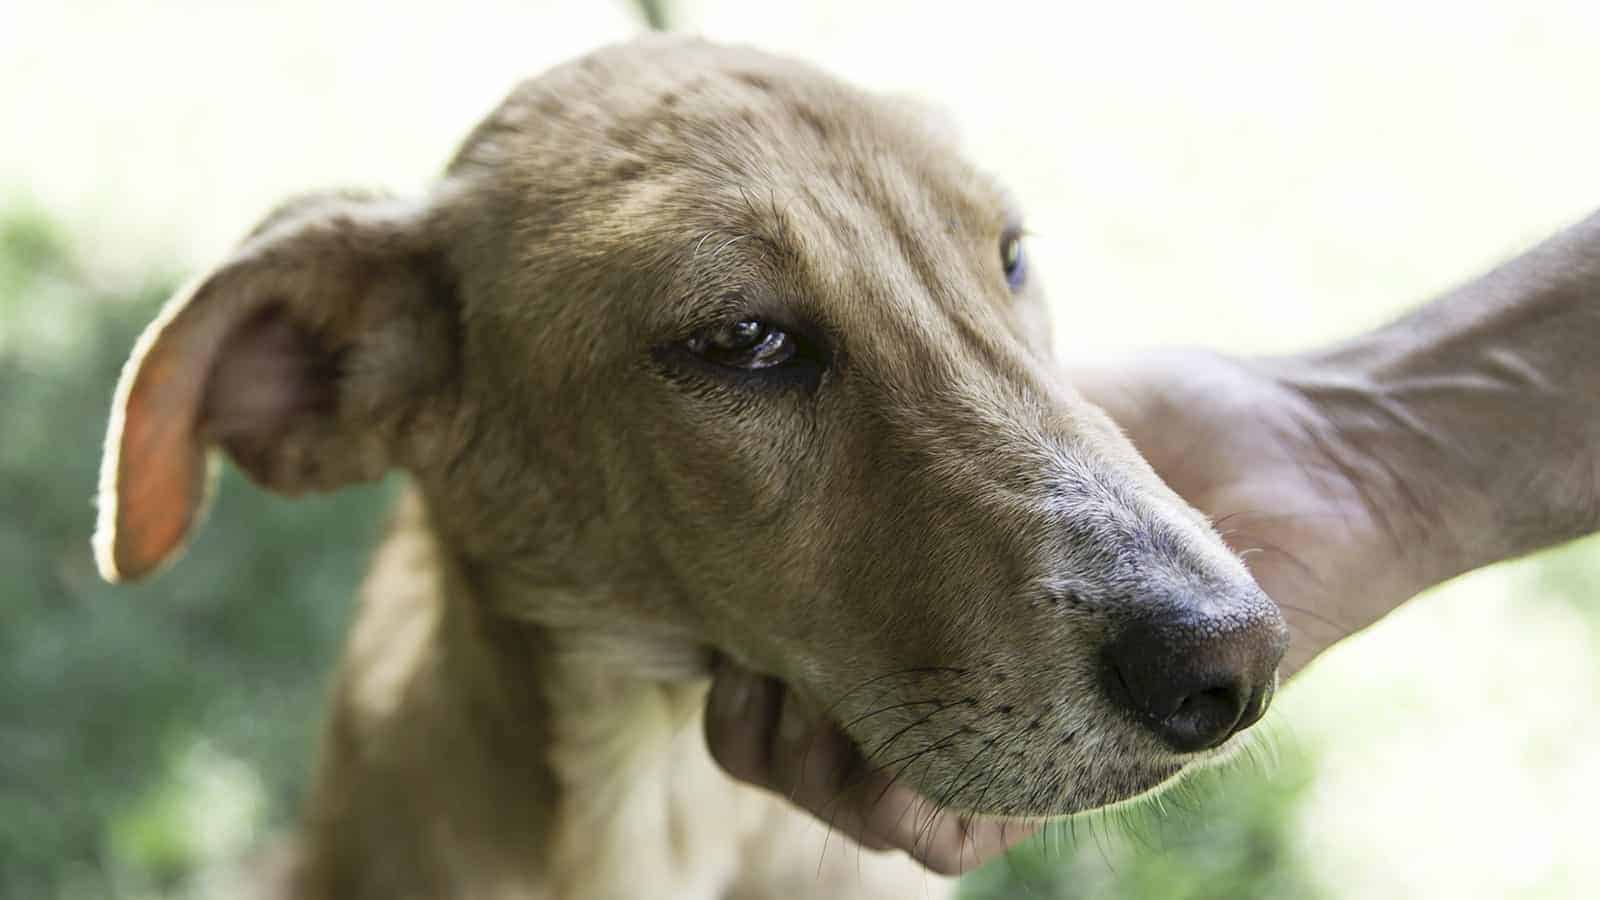 Virginia Reveals Law That Makes Animal Cruelty a Felony